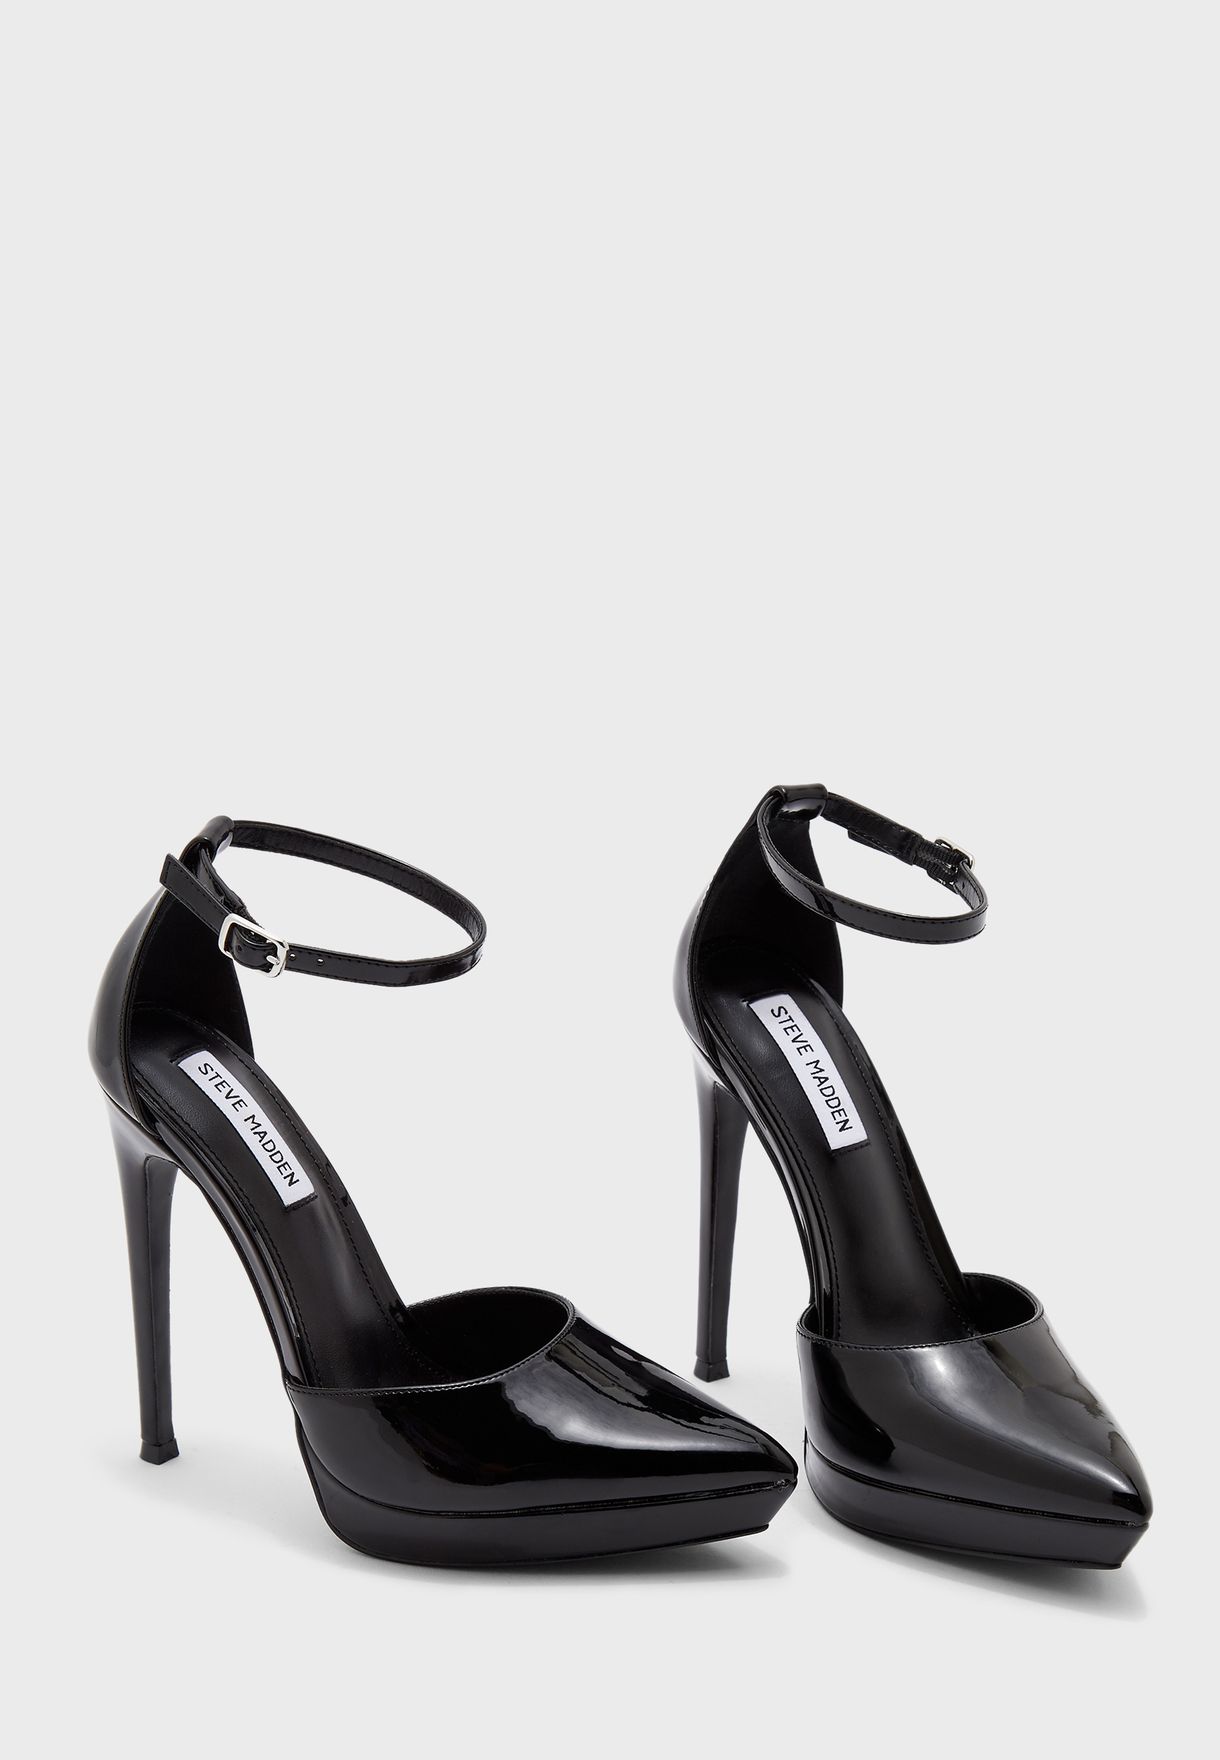 steve madden black high heels